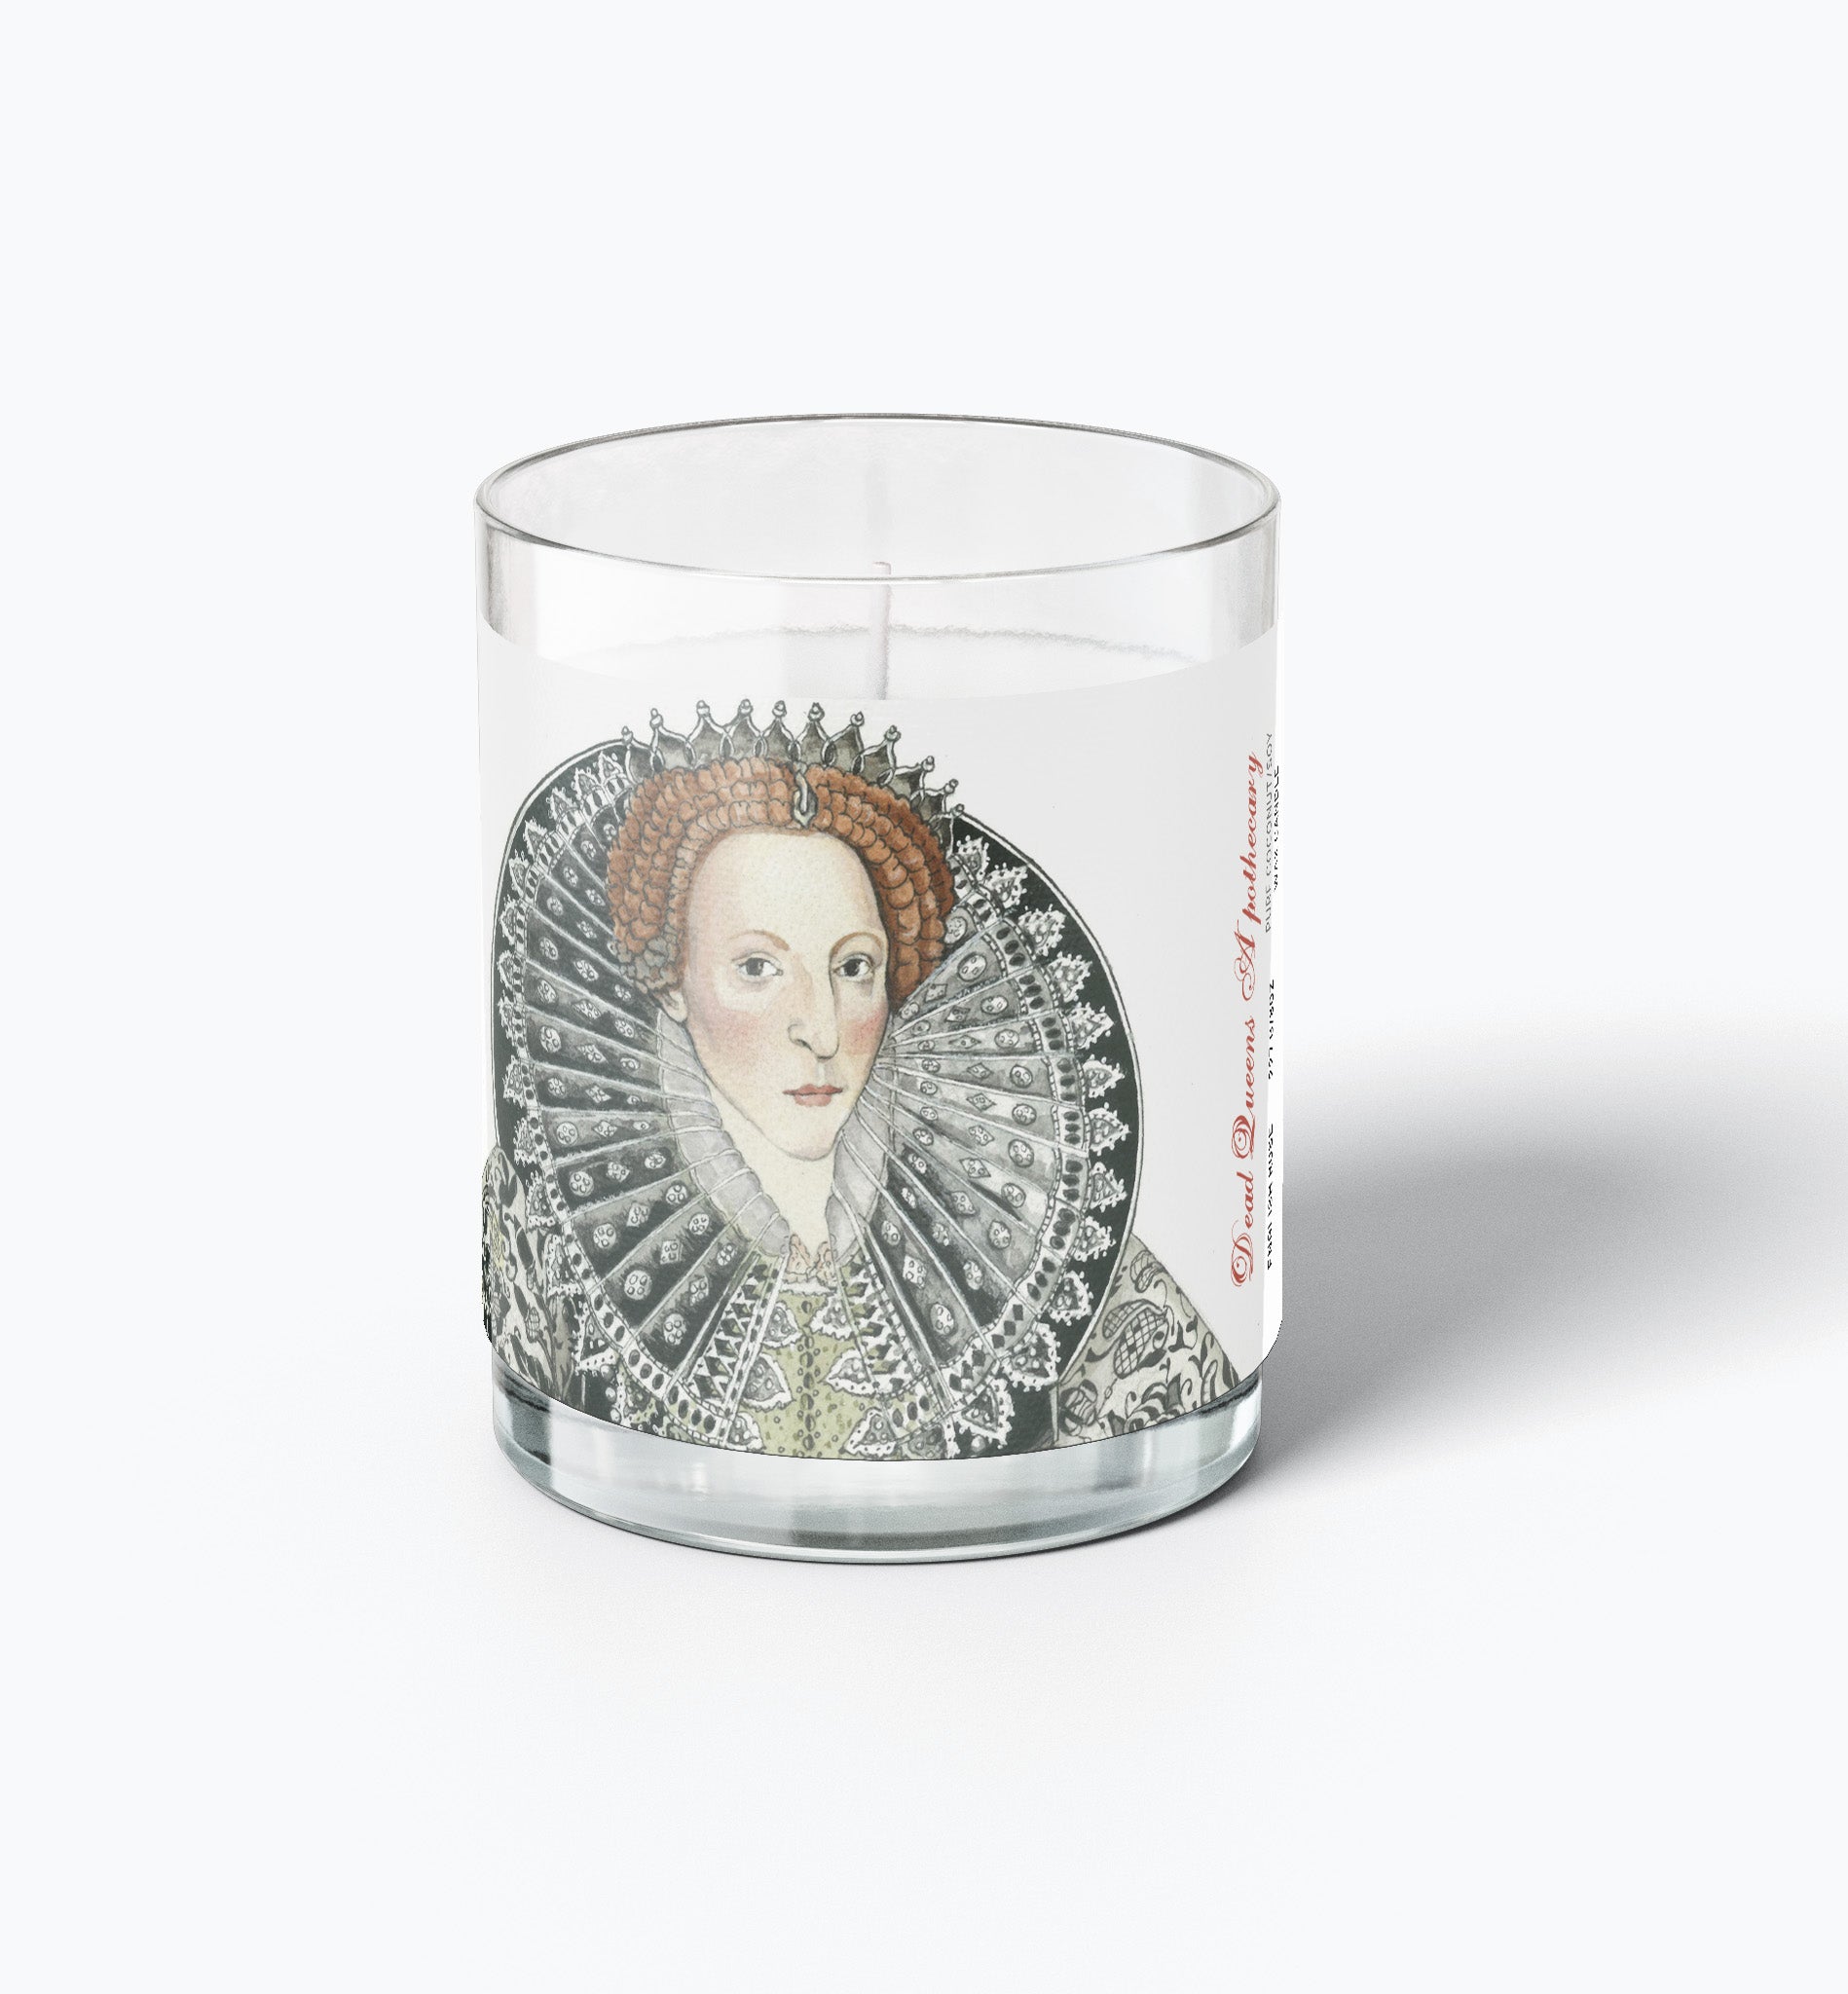 Queen Elizabeth I English Rose Candle - Dead Queens